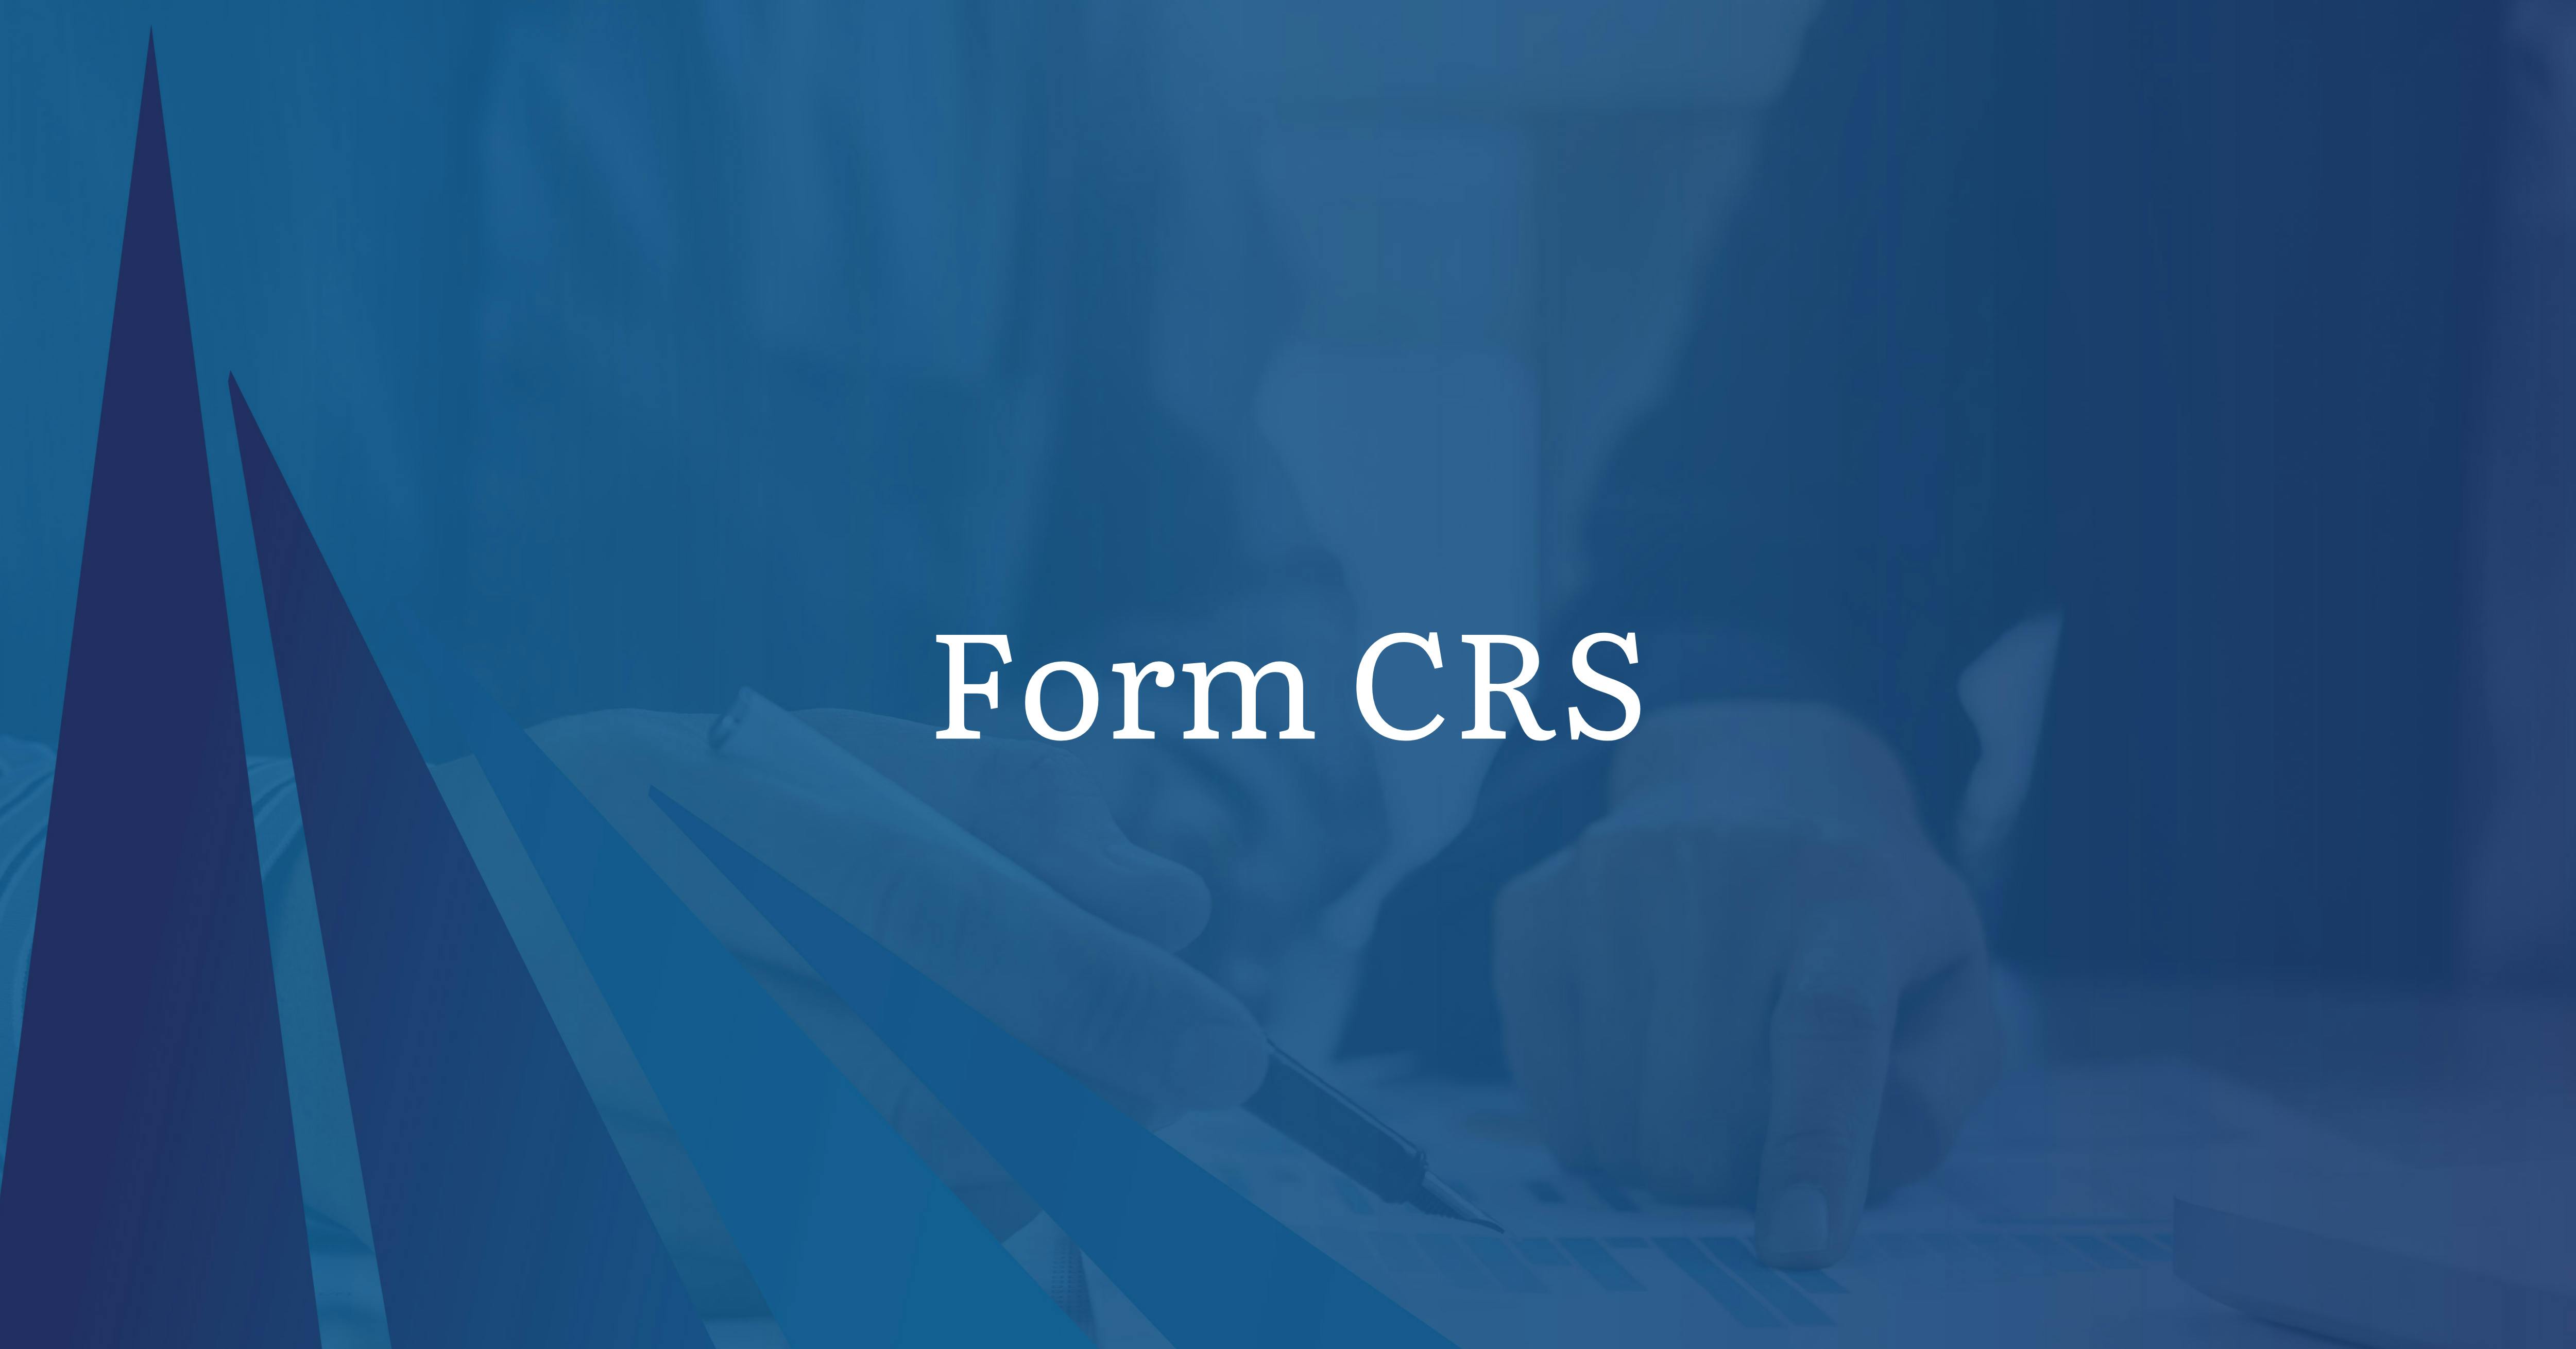 Form CRS